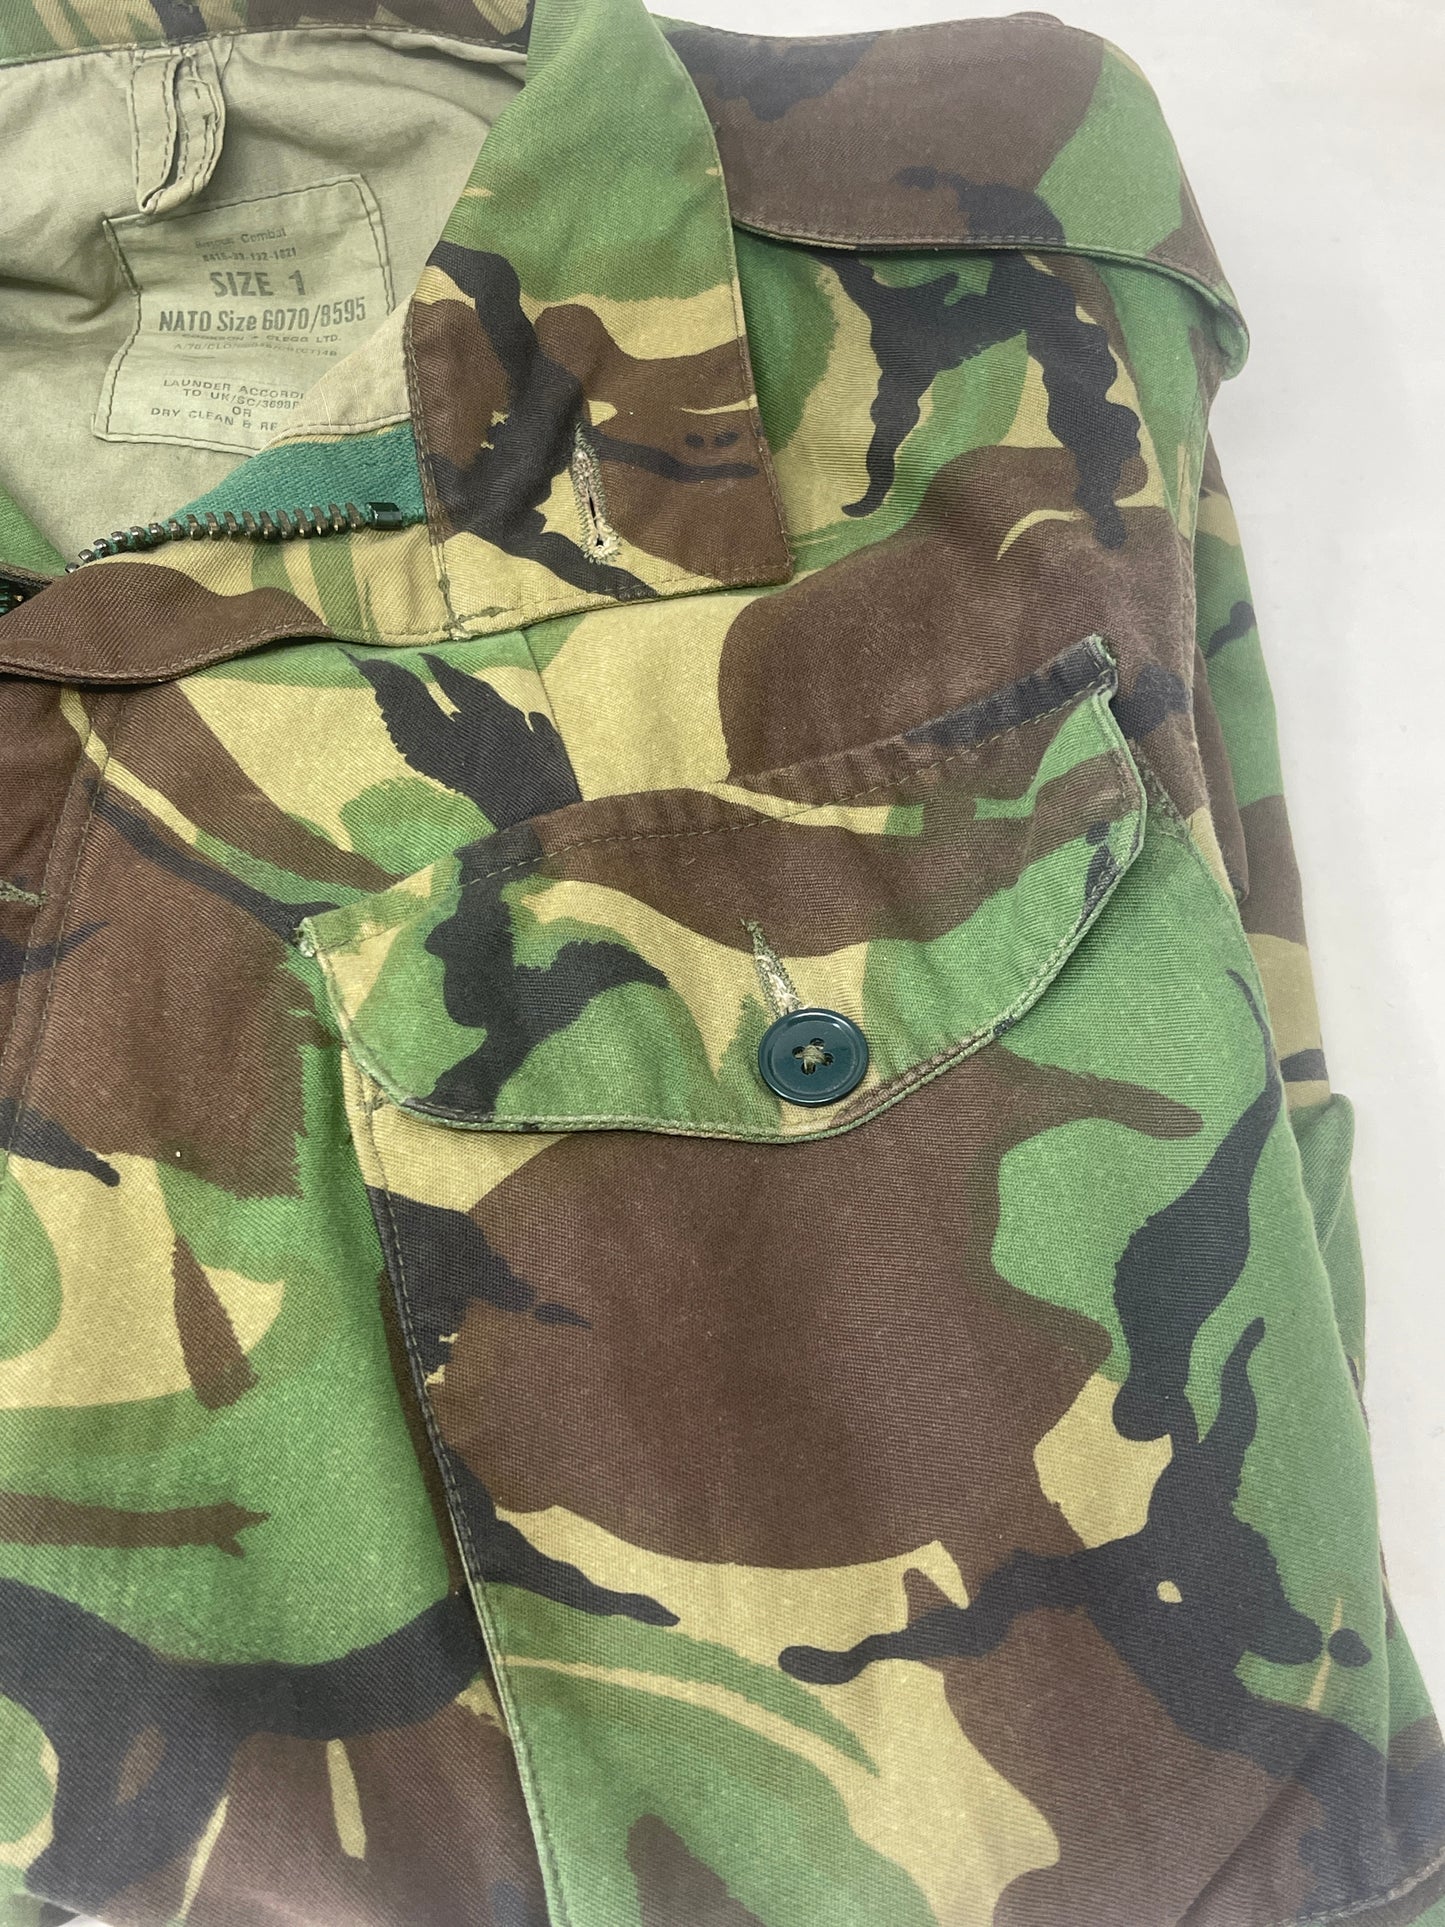 Smock, Combat Dress, 1968 pattern (DPM): British Army